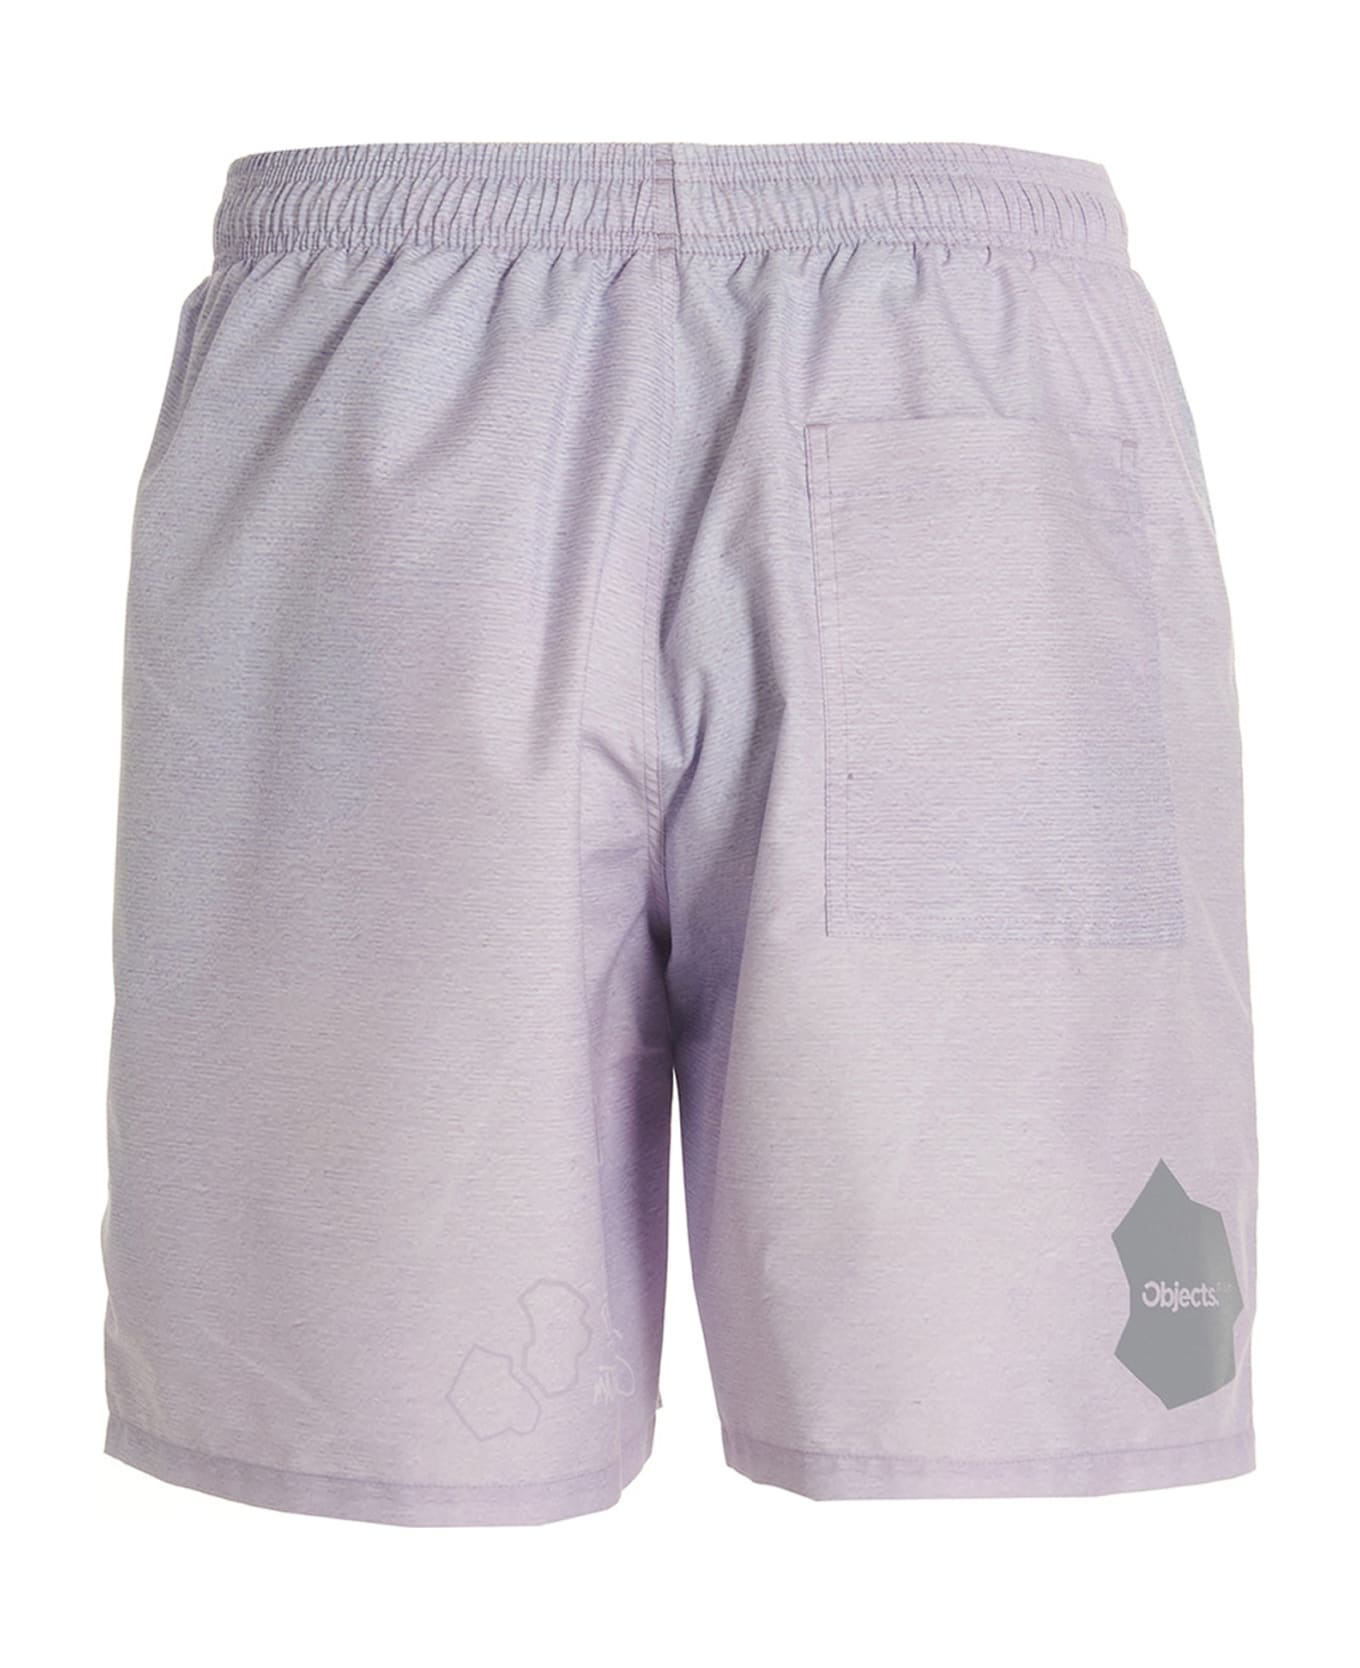 Objects Iv Life Printed Beach Shorts - Purple 水着